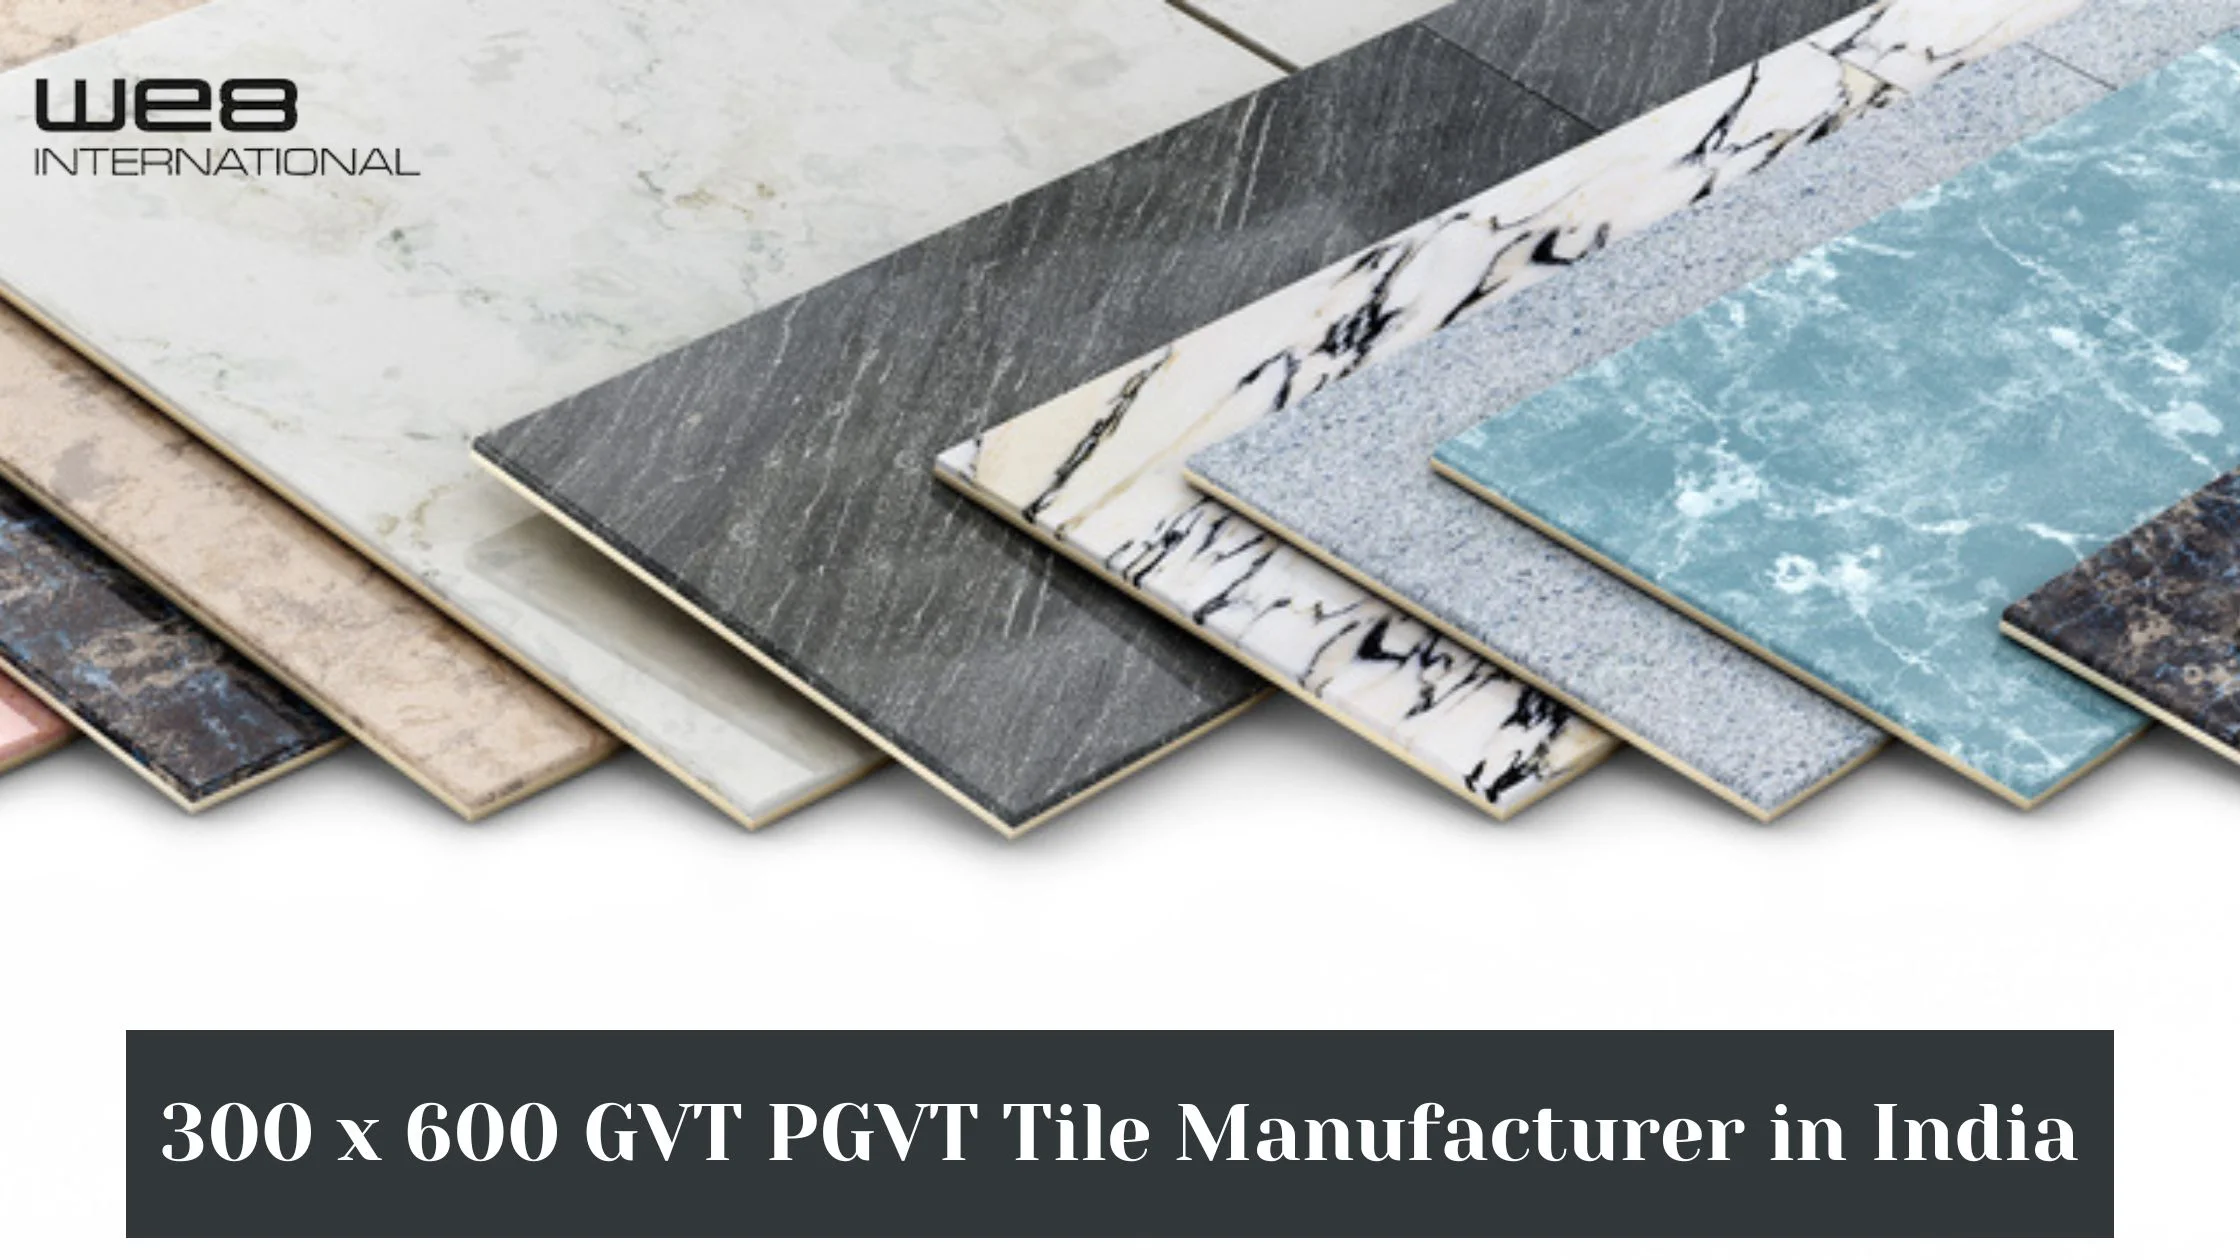 300 x 600 GVT PGVT Tile Manufacturer in India